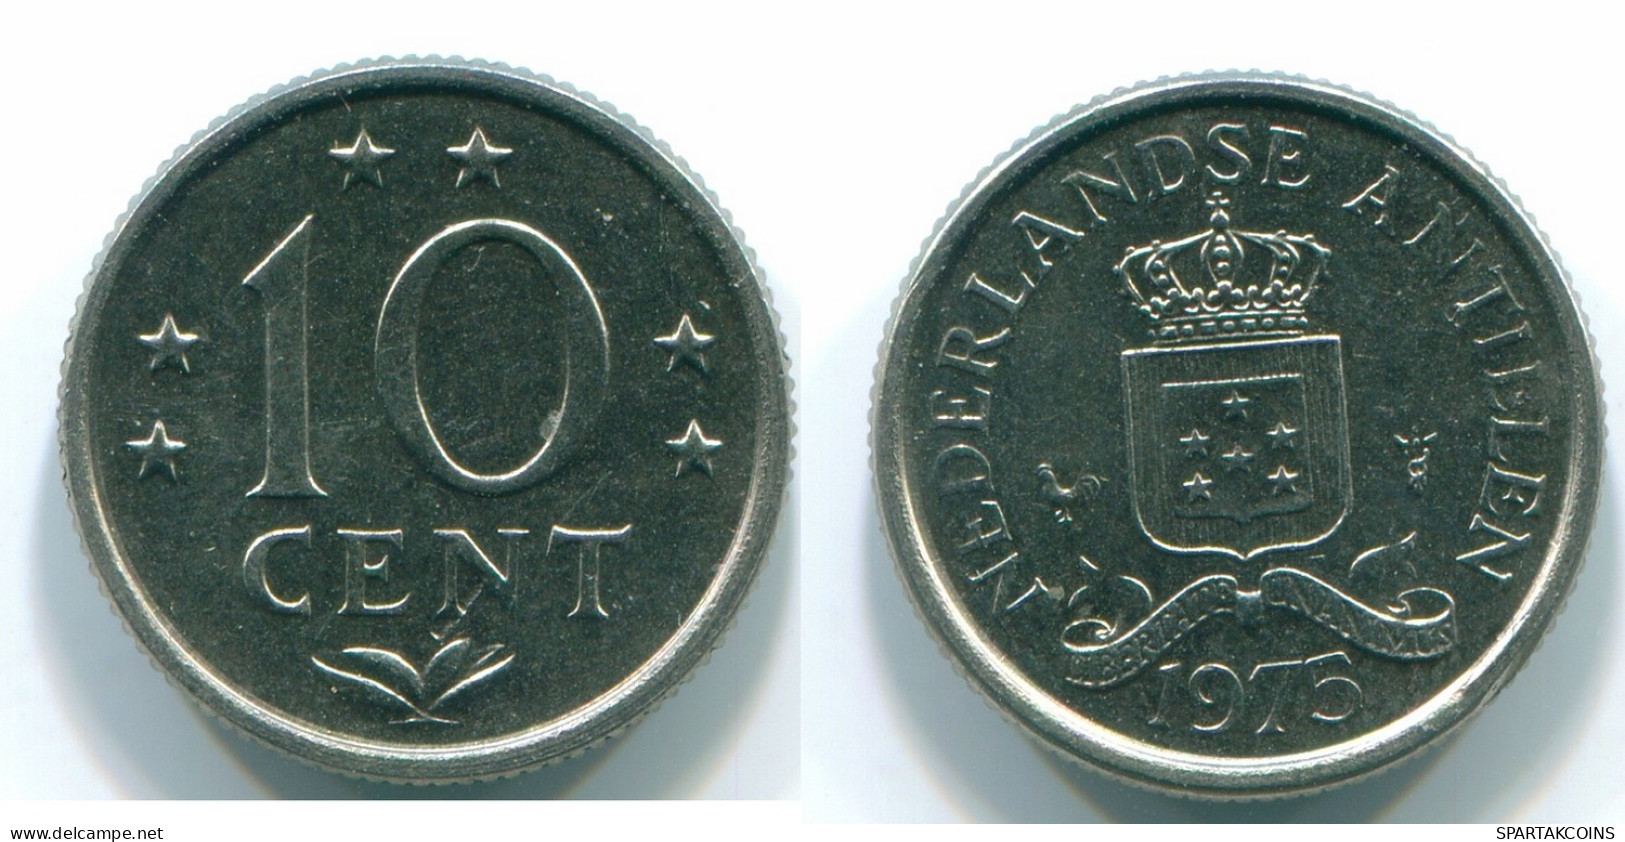 10 CENTS 1976 ANTILLES NÉERLANDAISES Nickel Colonial Pièce #S13735.F.A - Nederlandse Antillen